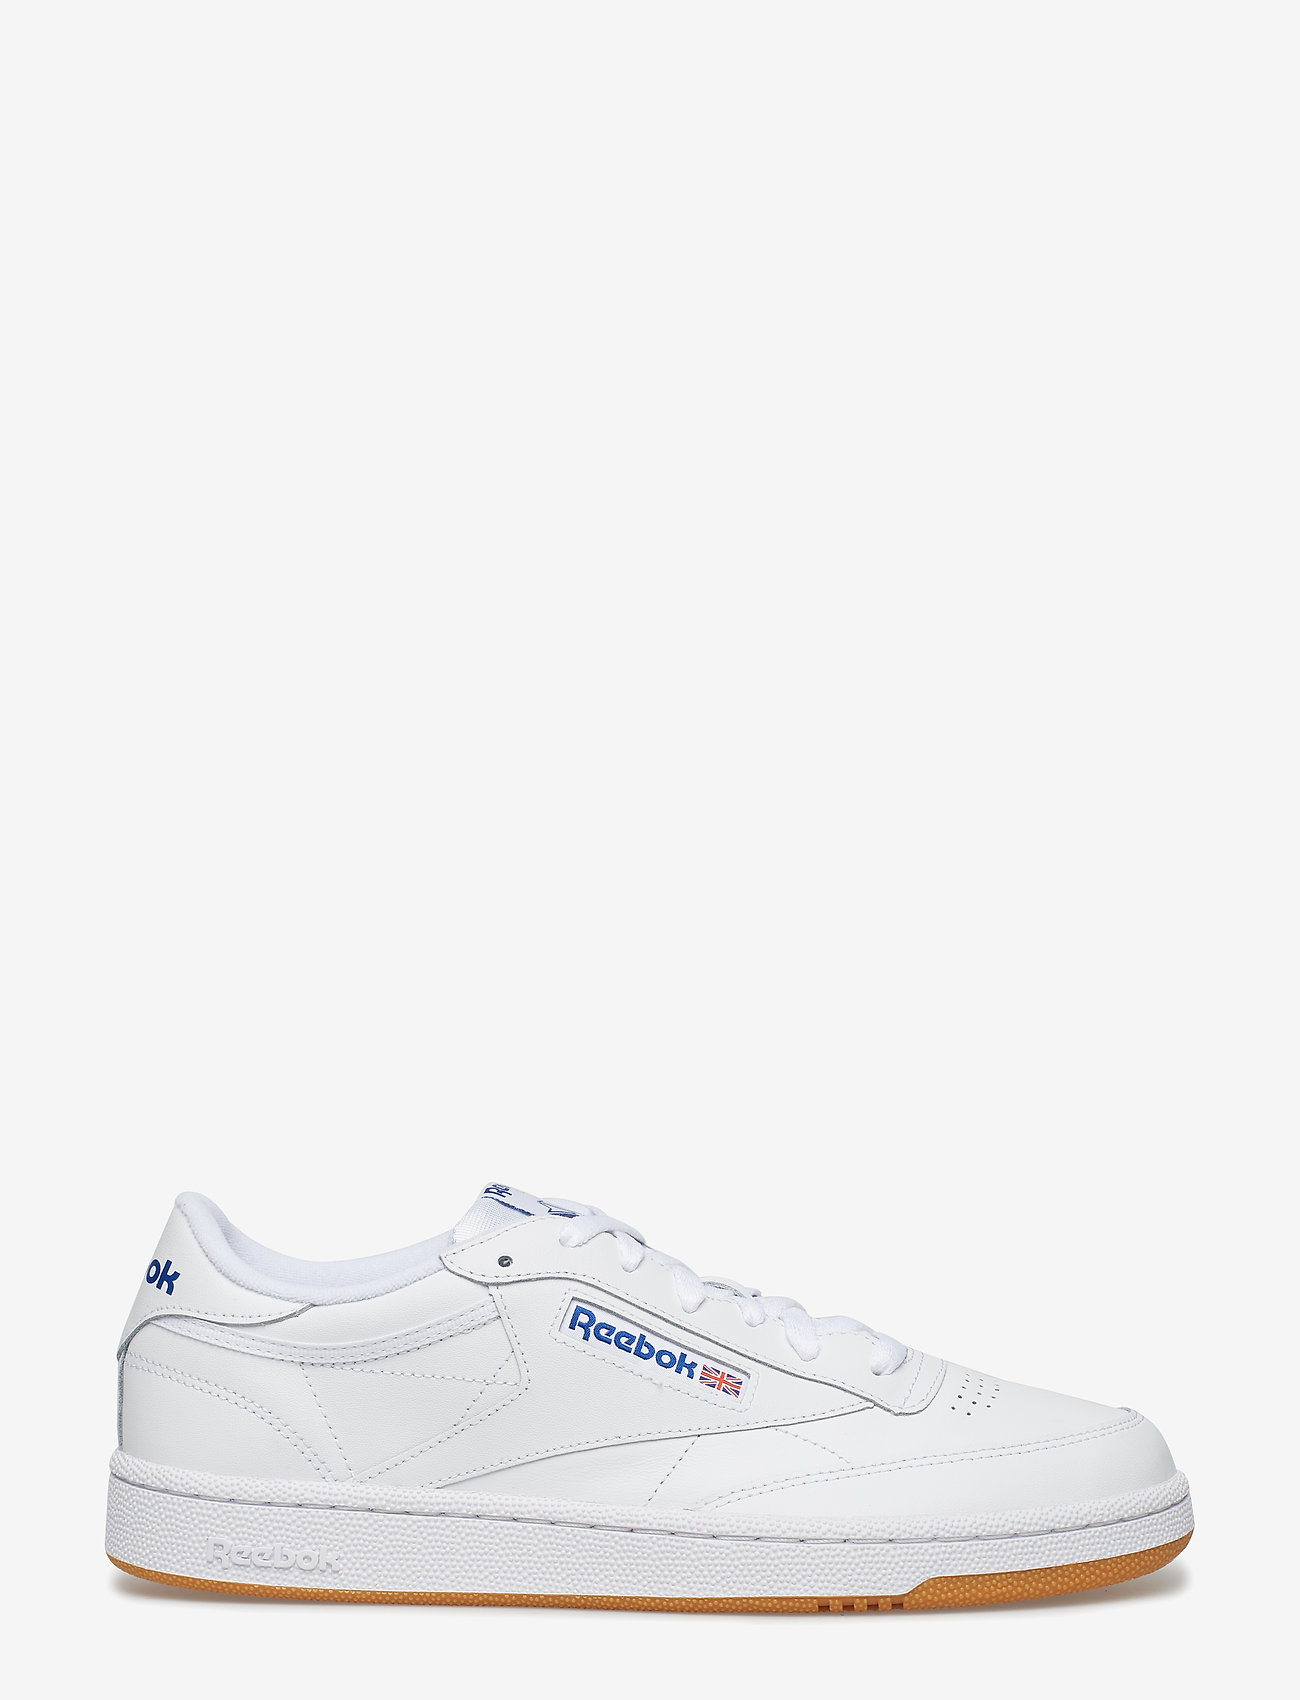 Reebok Classics - CLUB C 85 - low top sneakers - white/royal/gum - 1